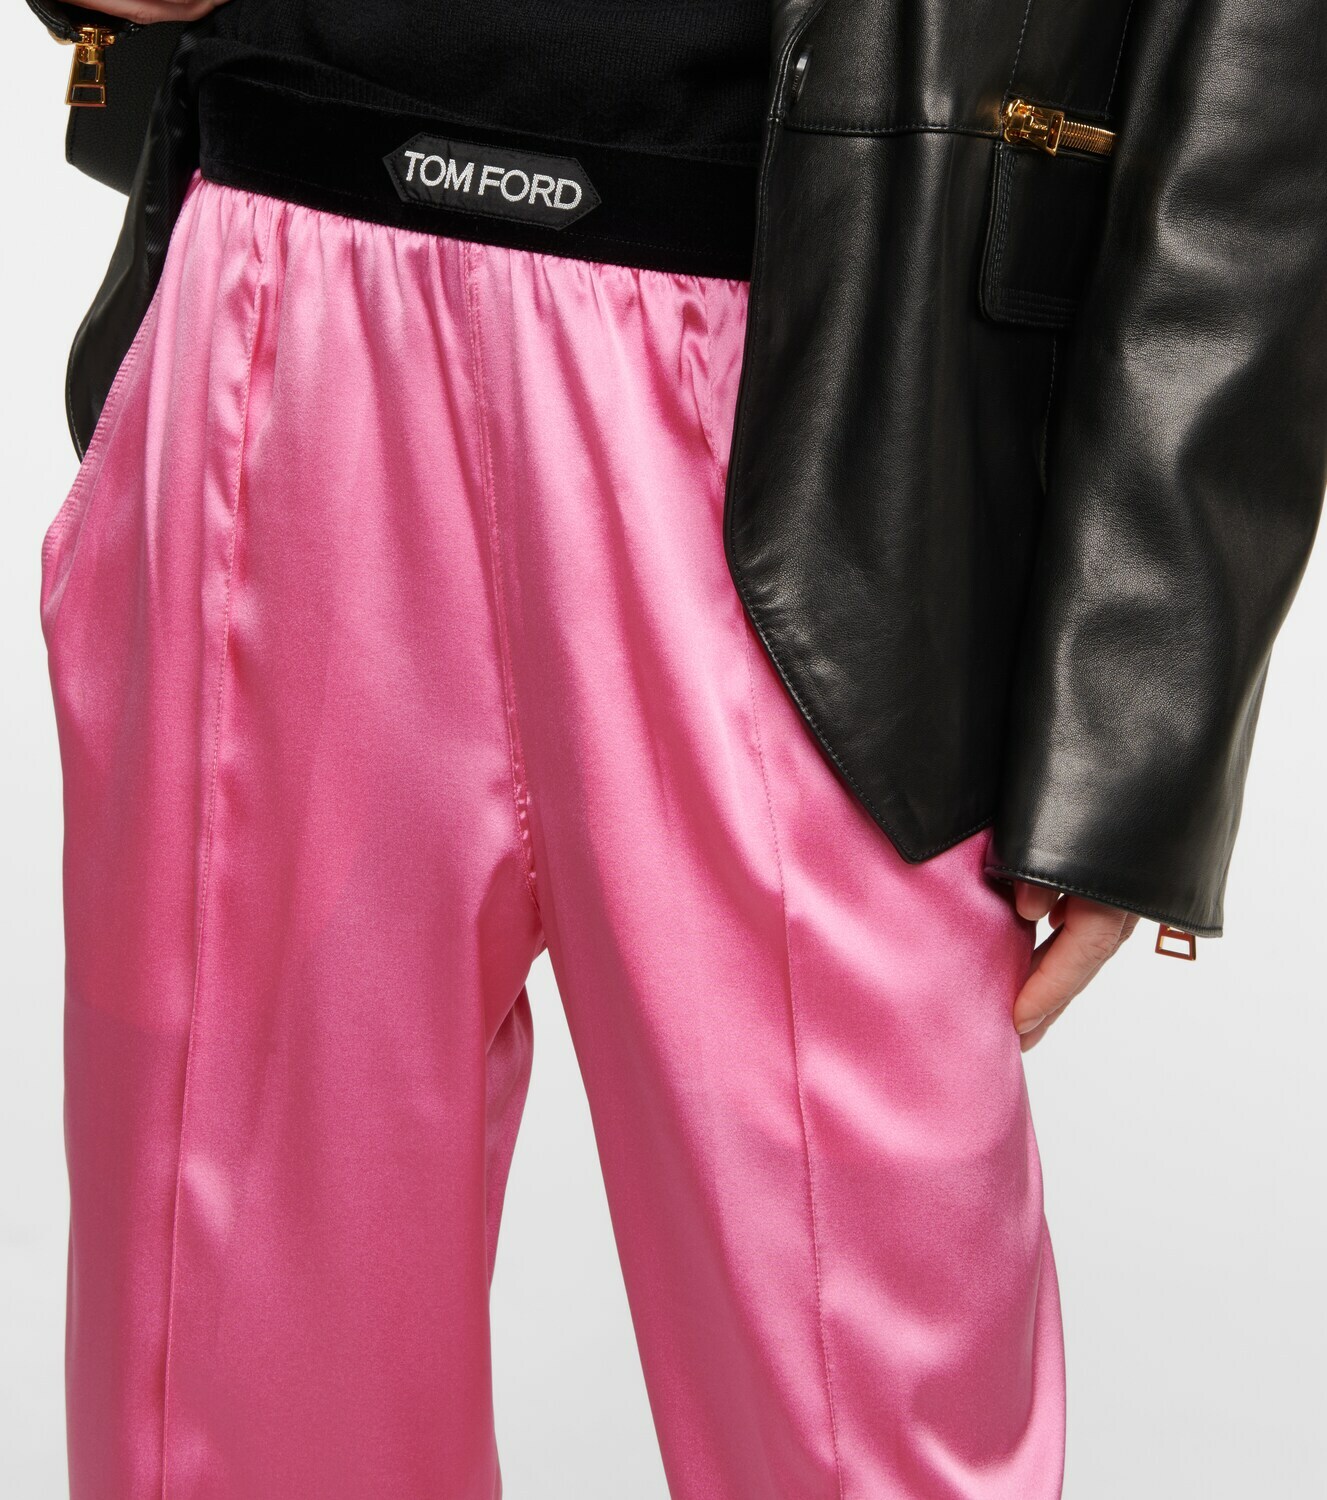 Tom Ford - High-rise silk-blend satin pants TOM FORD